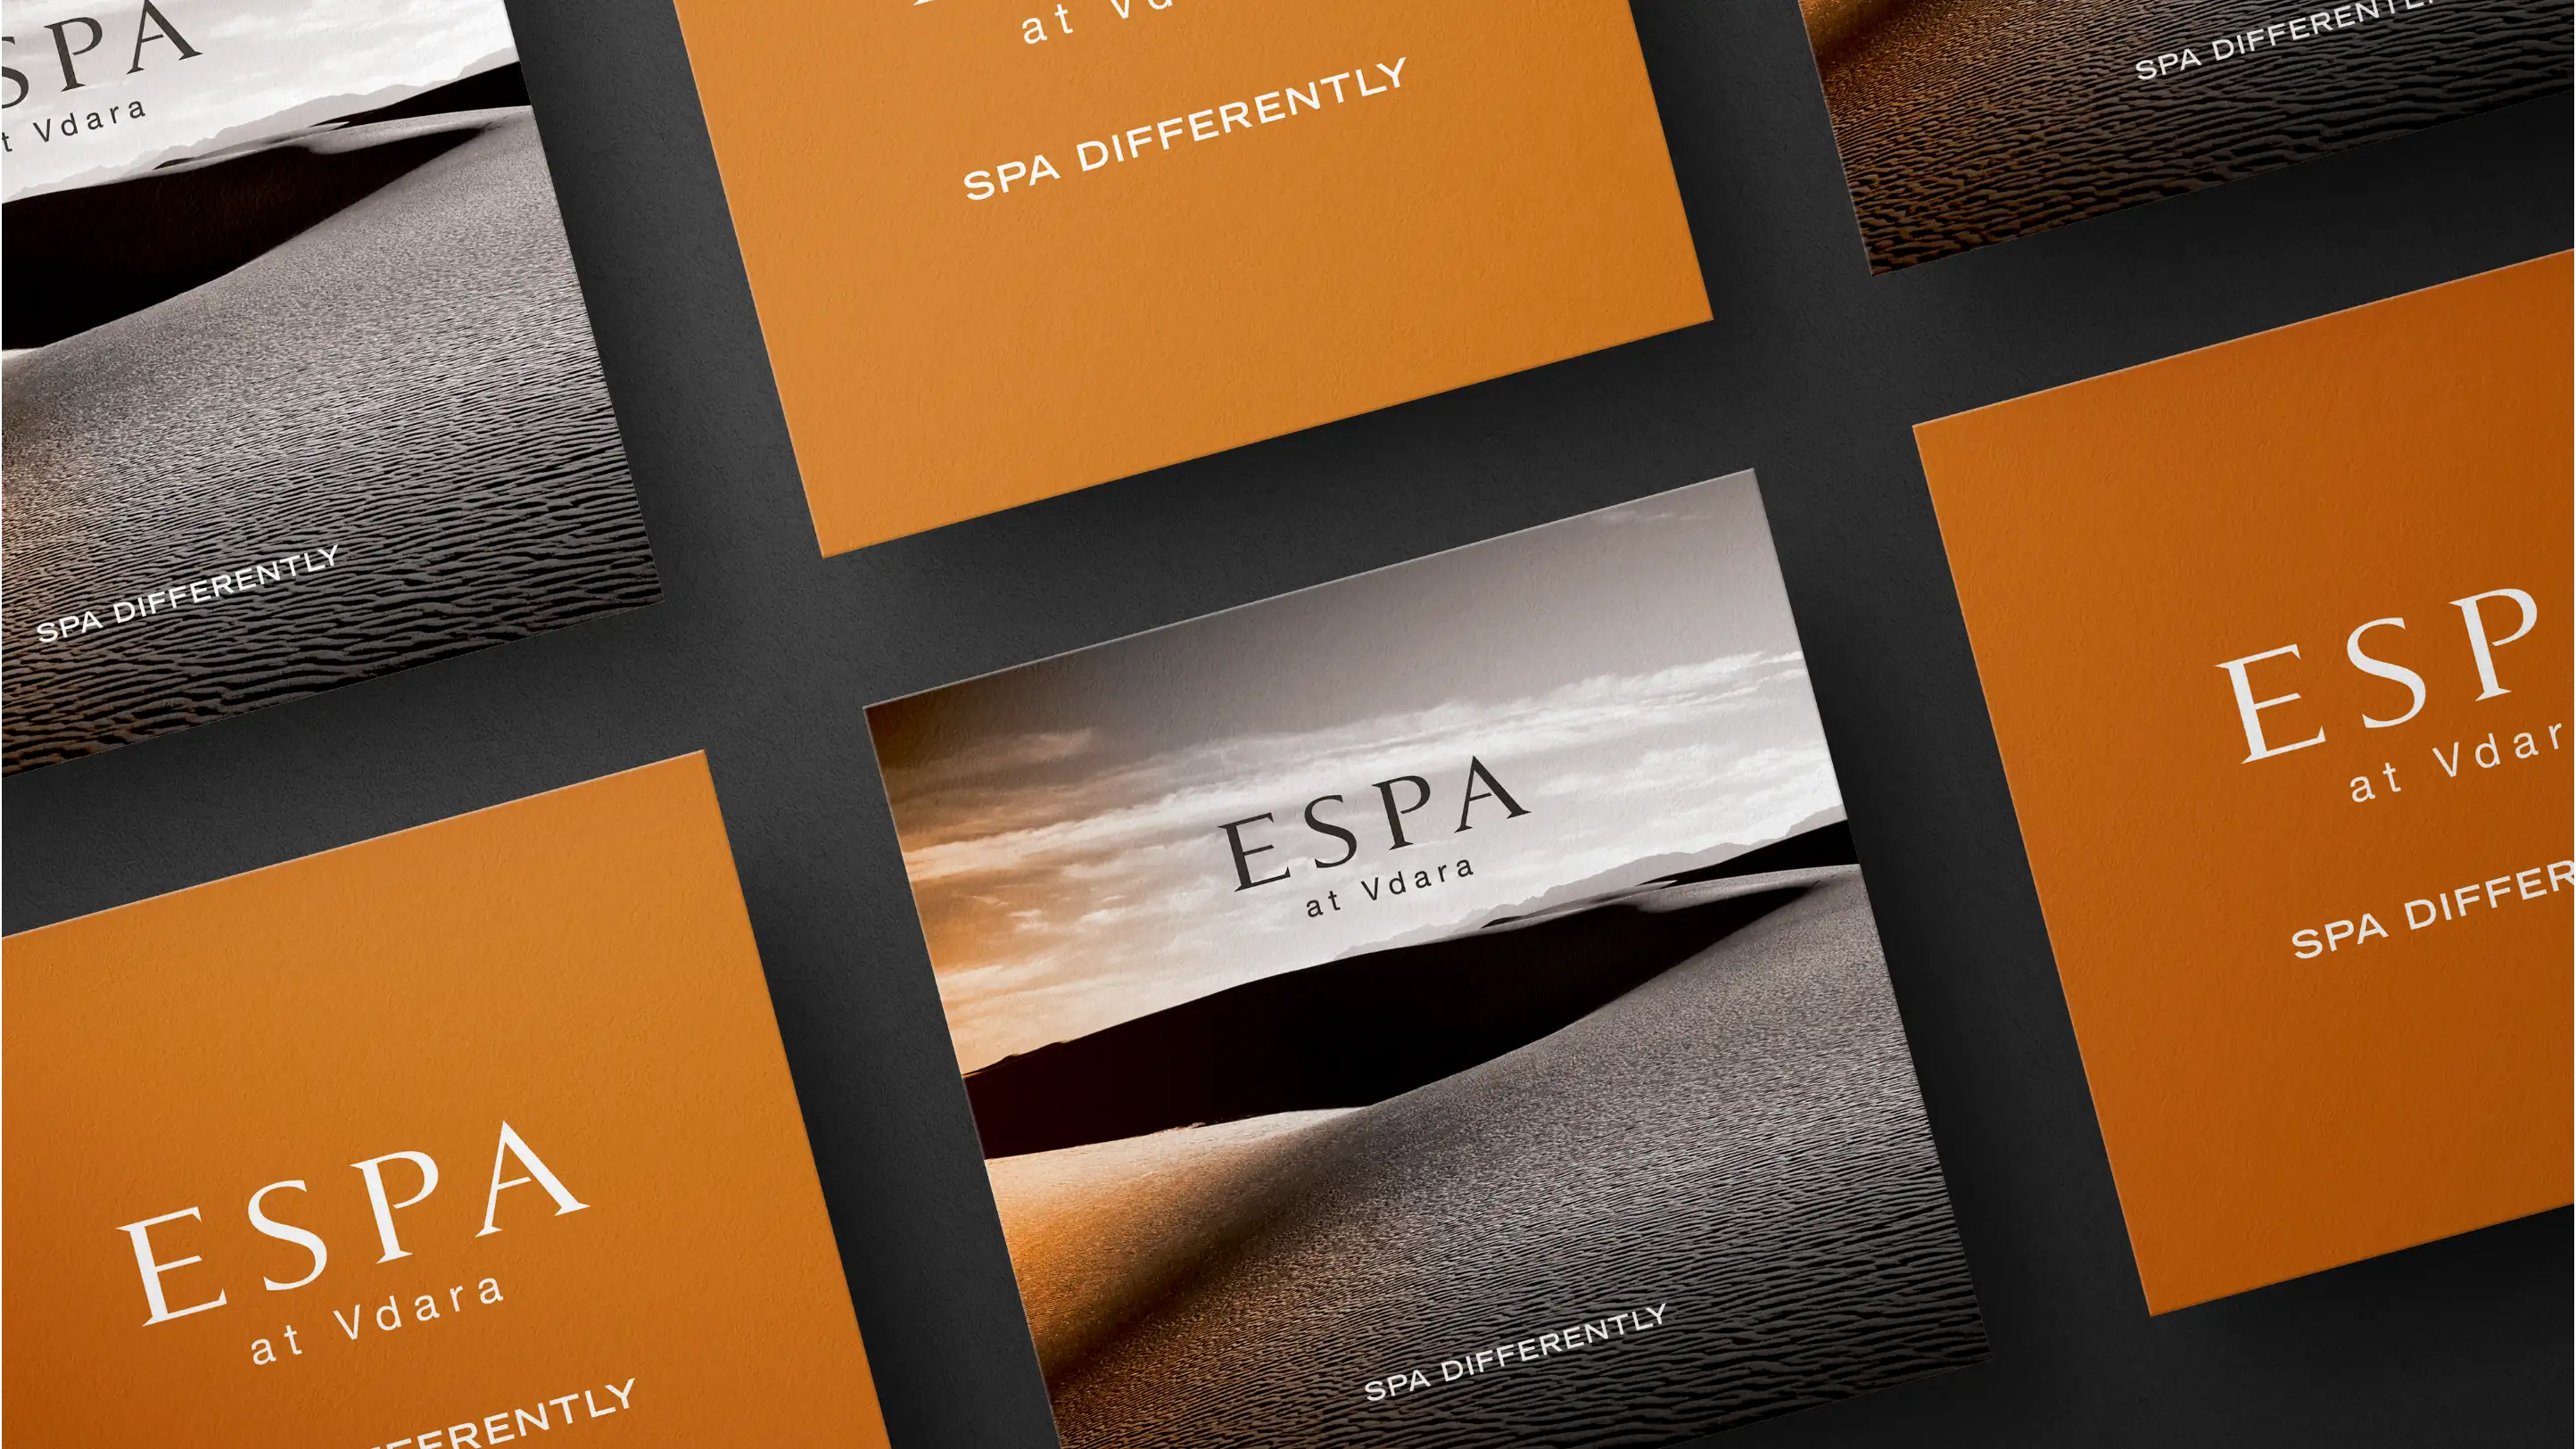 Espa at Vdara collateral card designs.